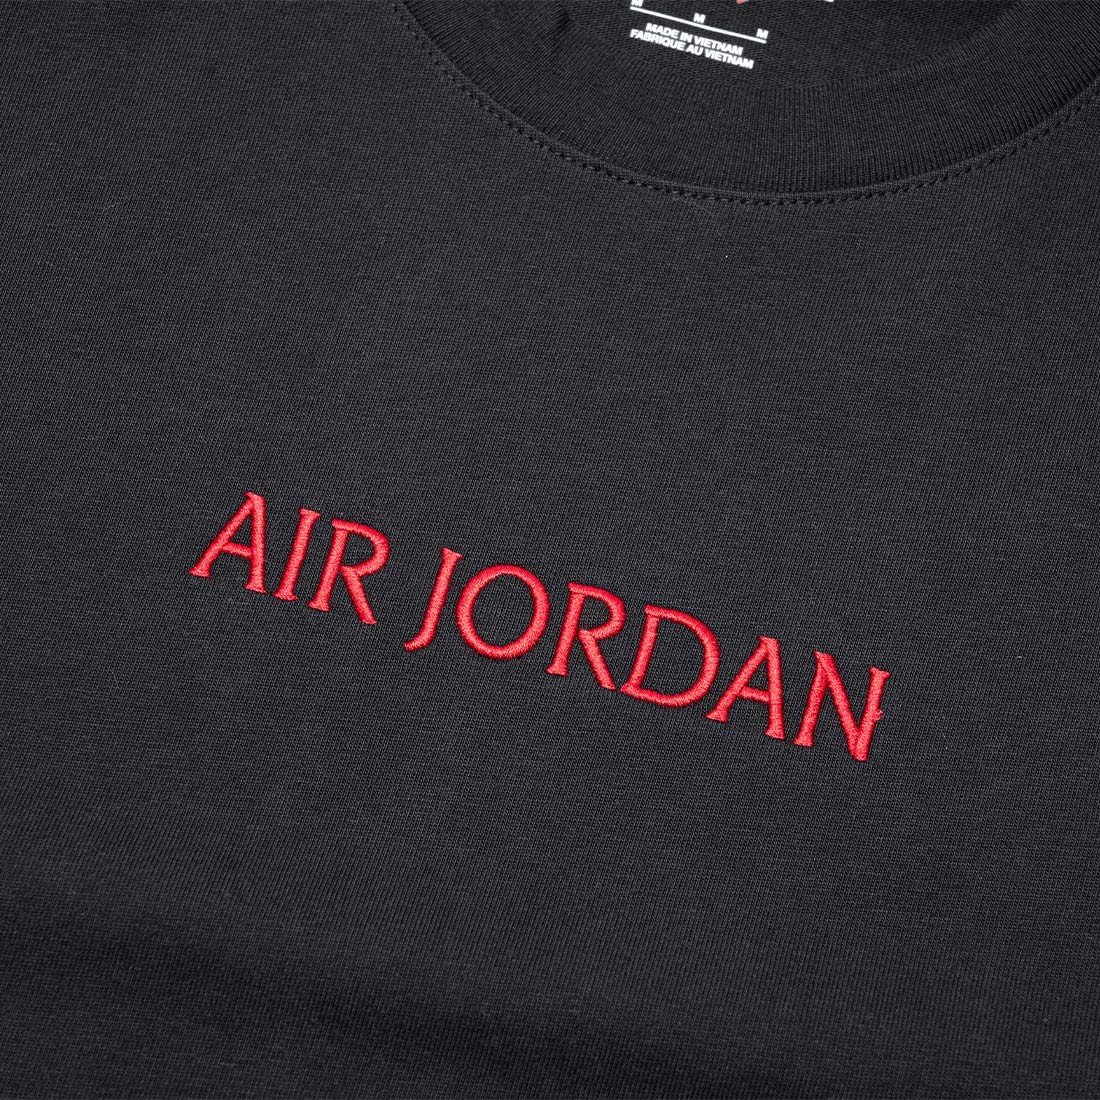 Jordan Brand Air Jordan T-Shirt - Do6098-010 - Sneakersnstuff (SNS)